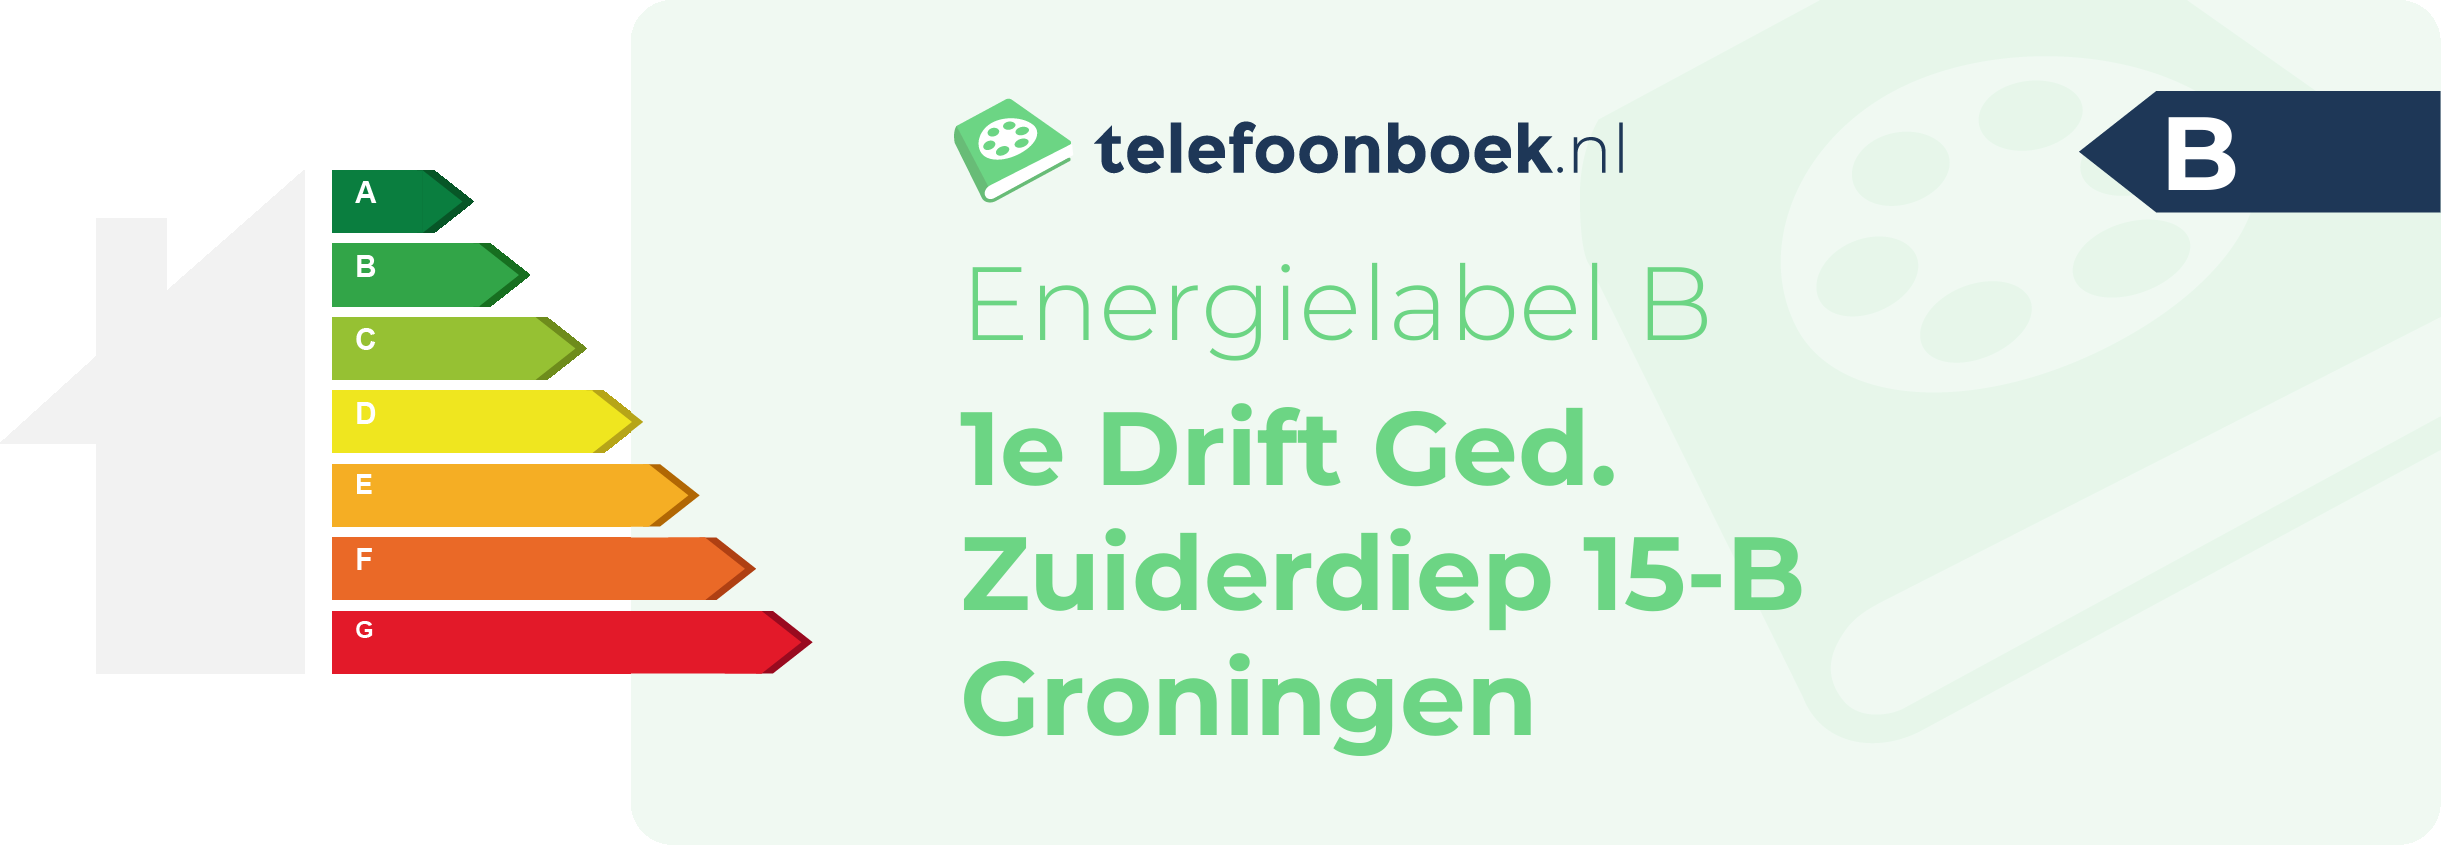 Energielabel 1e Drift Ged. Zuiderdiep 15-B Groningen